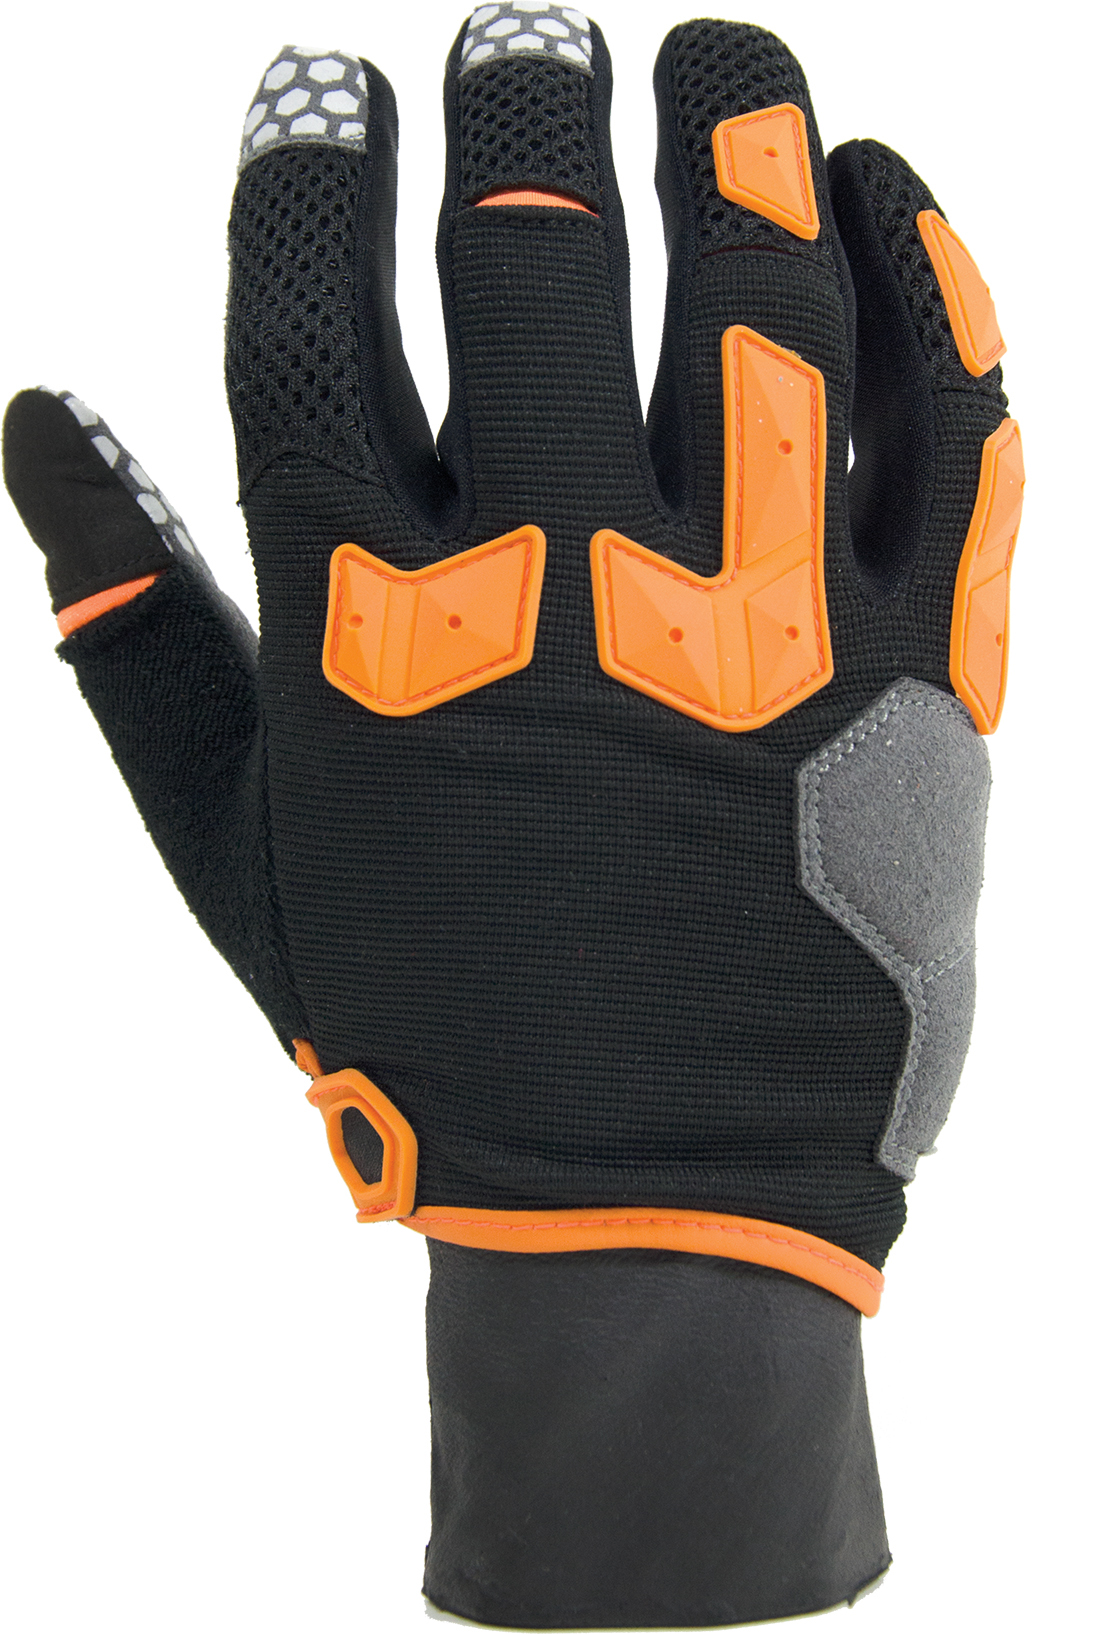 soft goods gloves mountain biking downhill mountain biking sports Protective Gear Sports Equipment